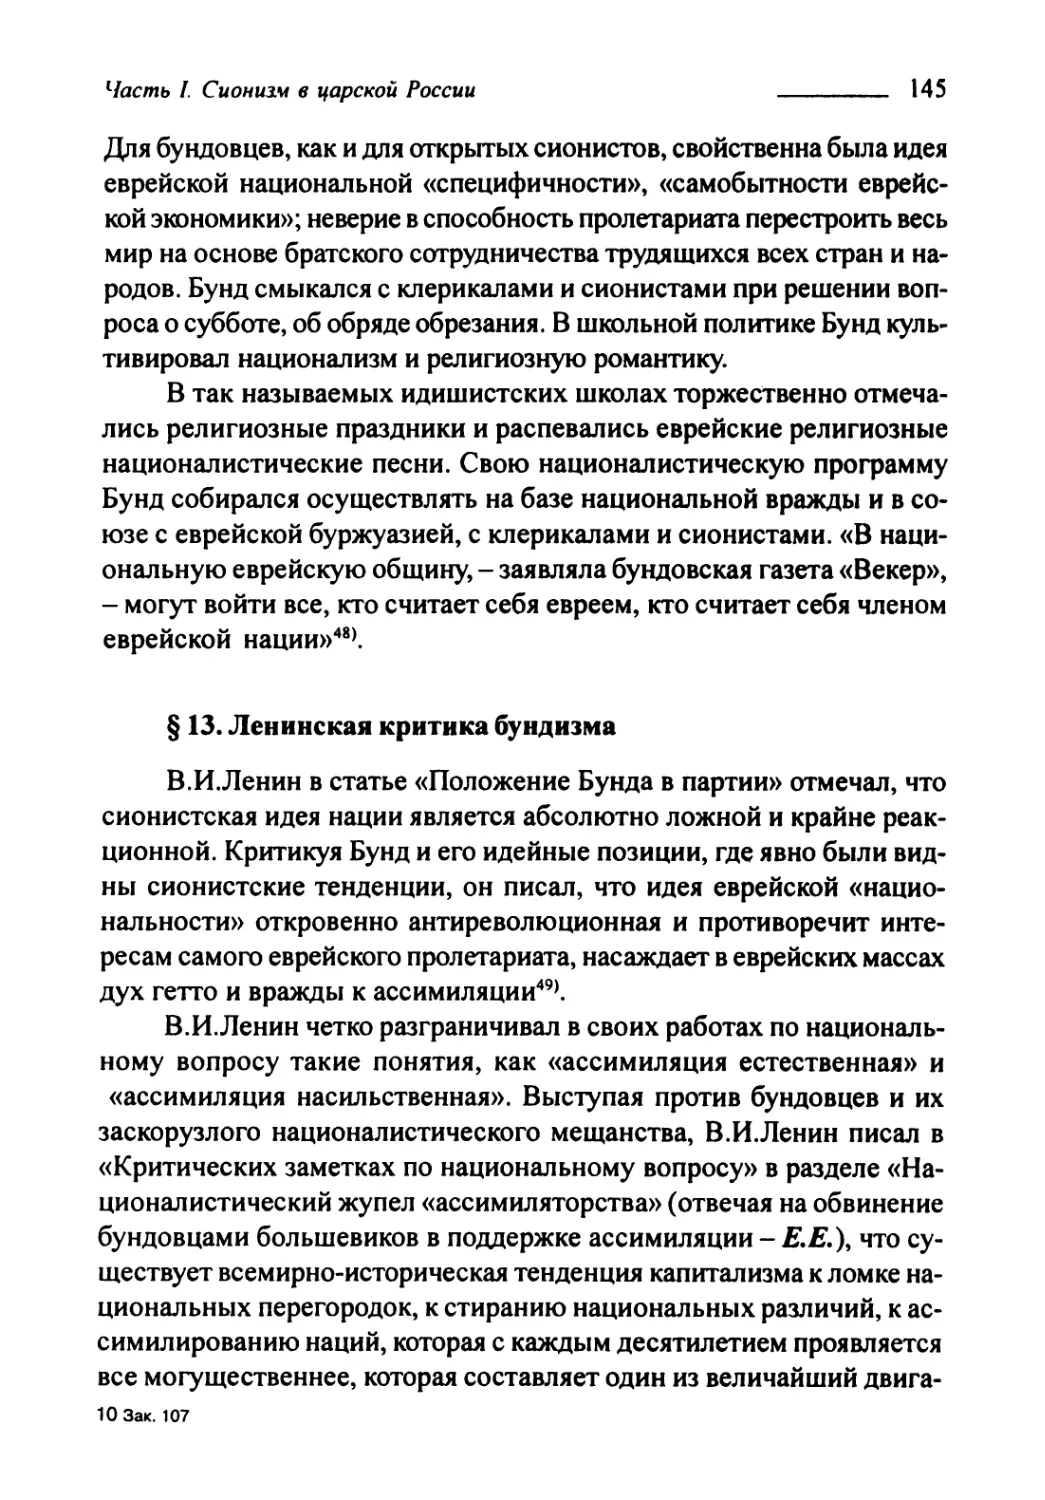 § 13. Ленинская критика бундизма